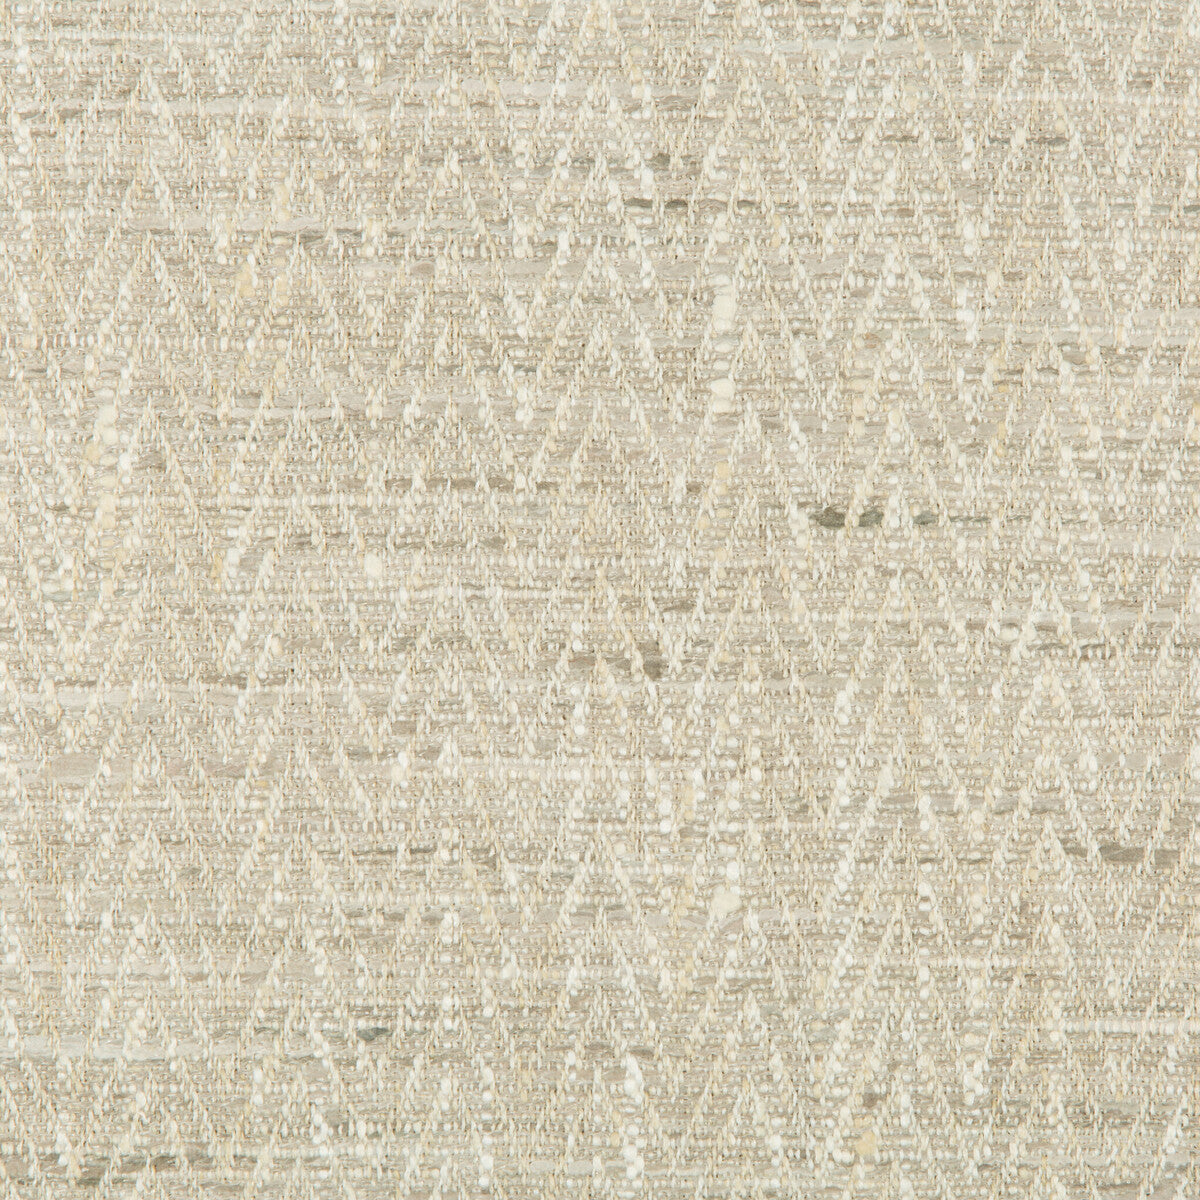 Kravet Smart fabric in 34092-11 color - pattern 34092.11.0 - by Kravet Smart